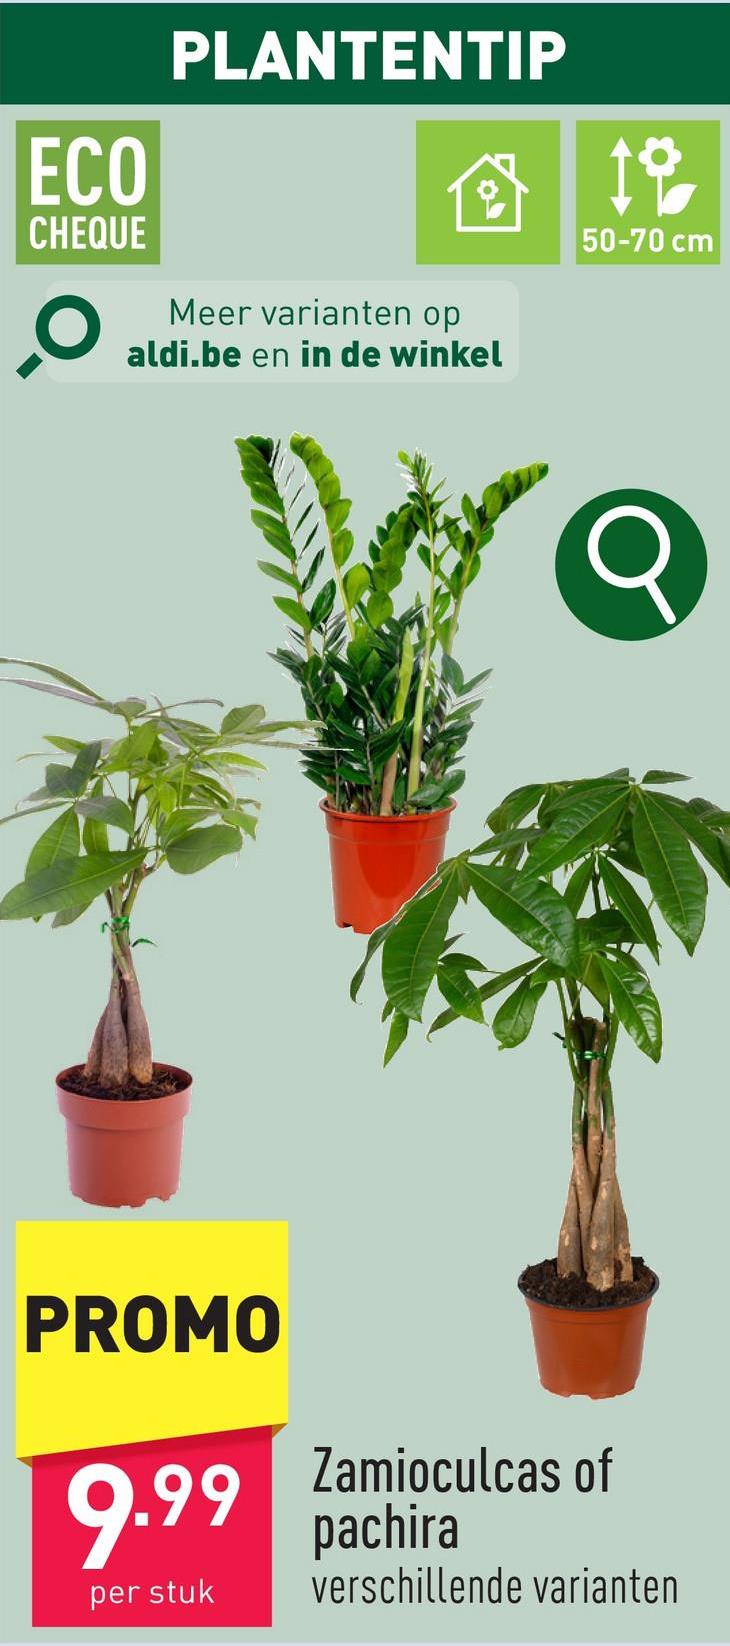 Zamioculcas of pachira kamerplant, diameter kweekpot: 17 cm, planthoogte: 50-70 cm (zamioculcas) of 60-70 cm (pachira), geen direct zonlicht, 1x per week water geven